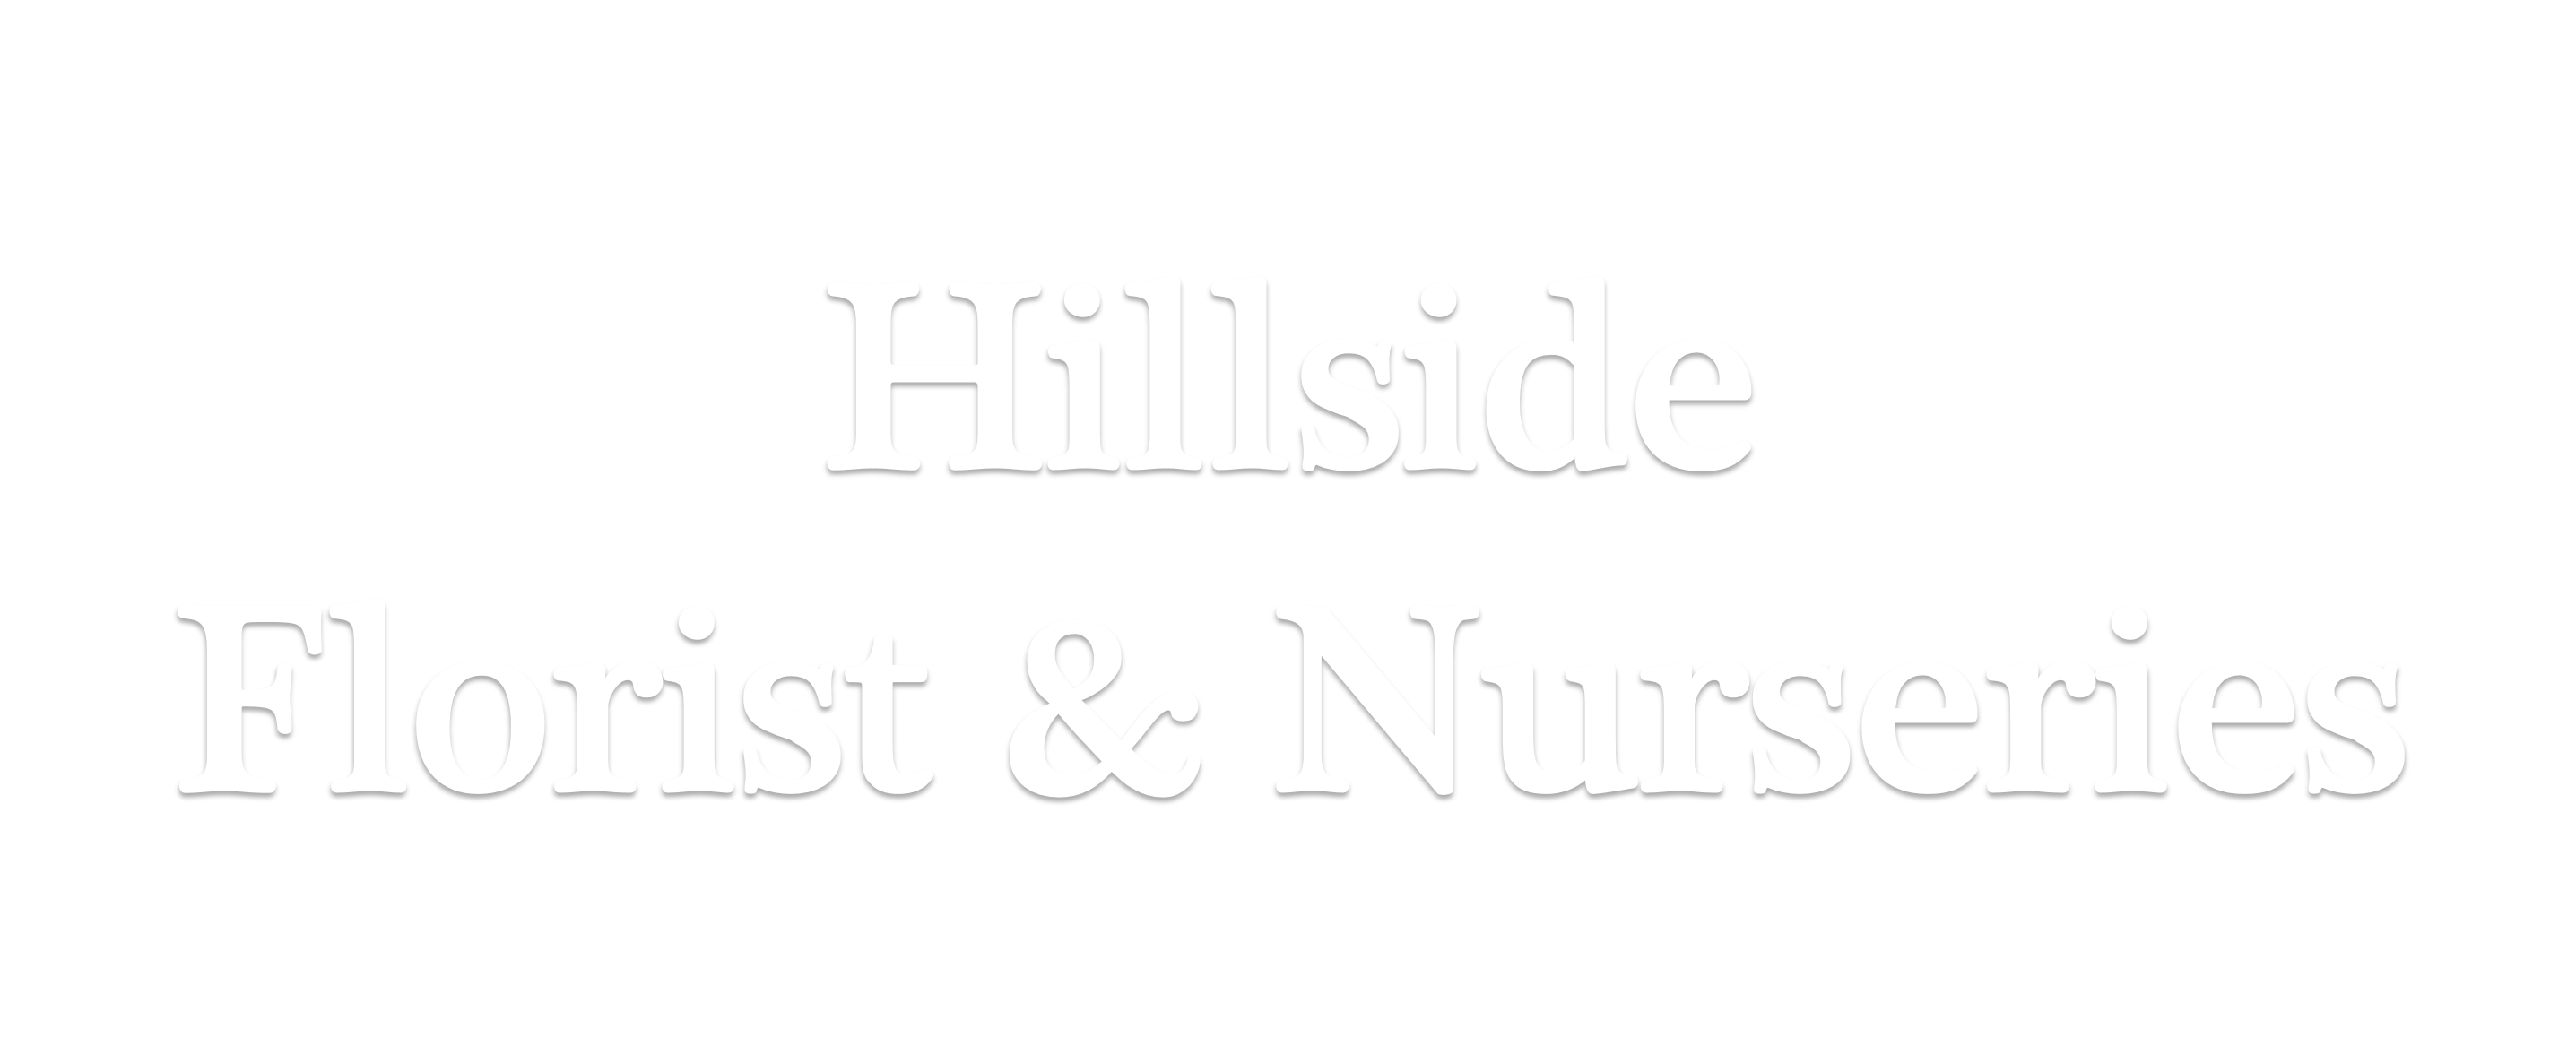 Hillside Florist & Nurseries - Logo